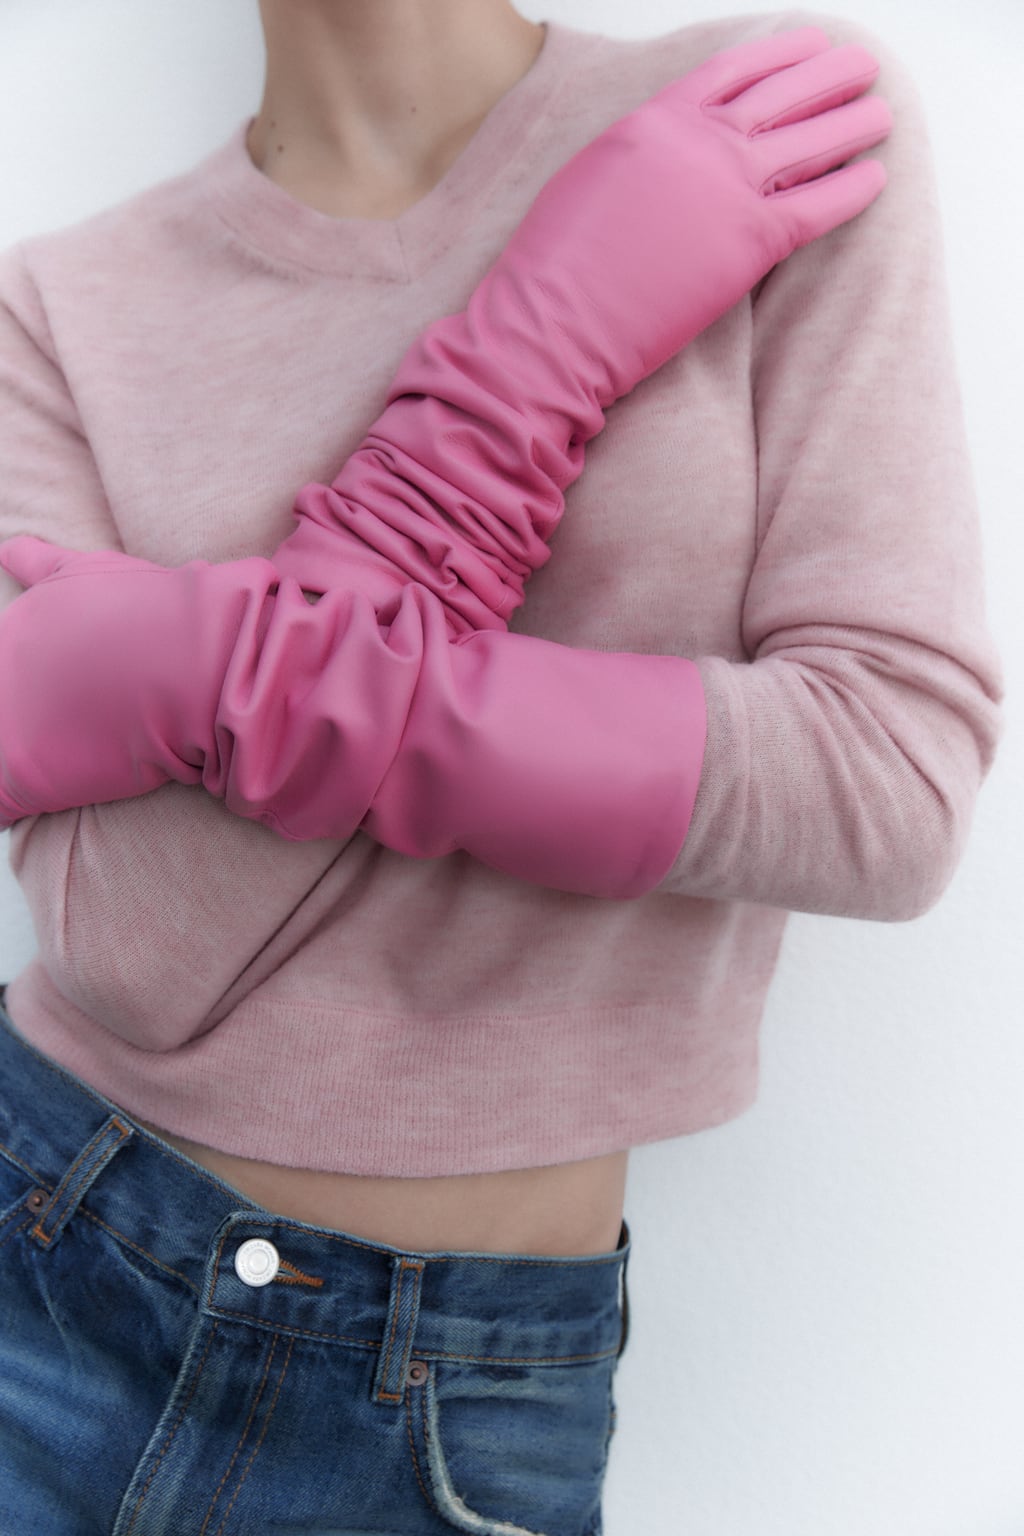 Zara Leather Gloves